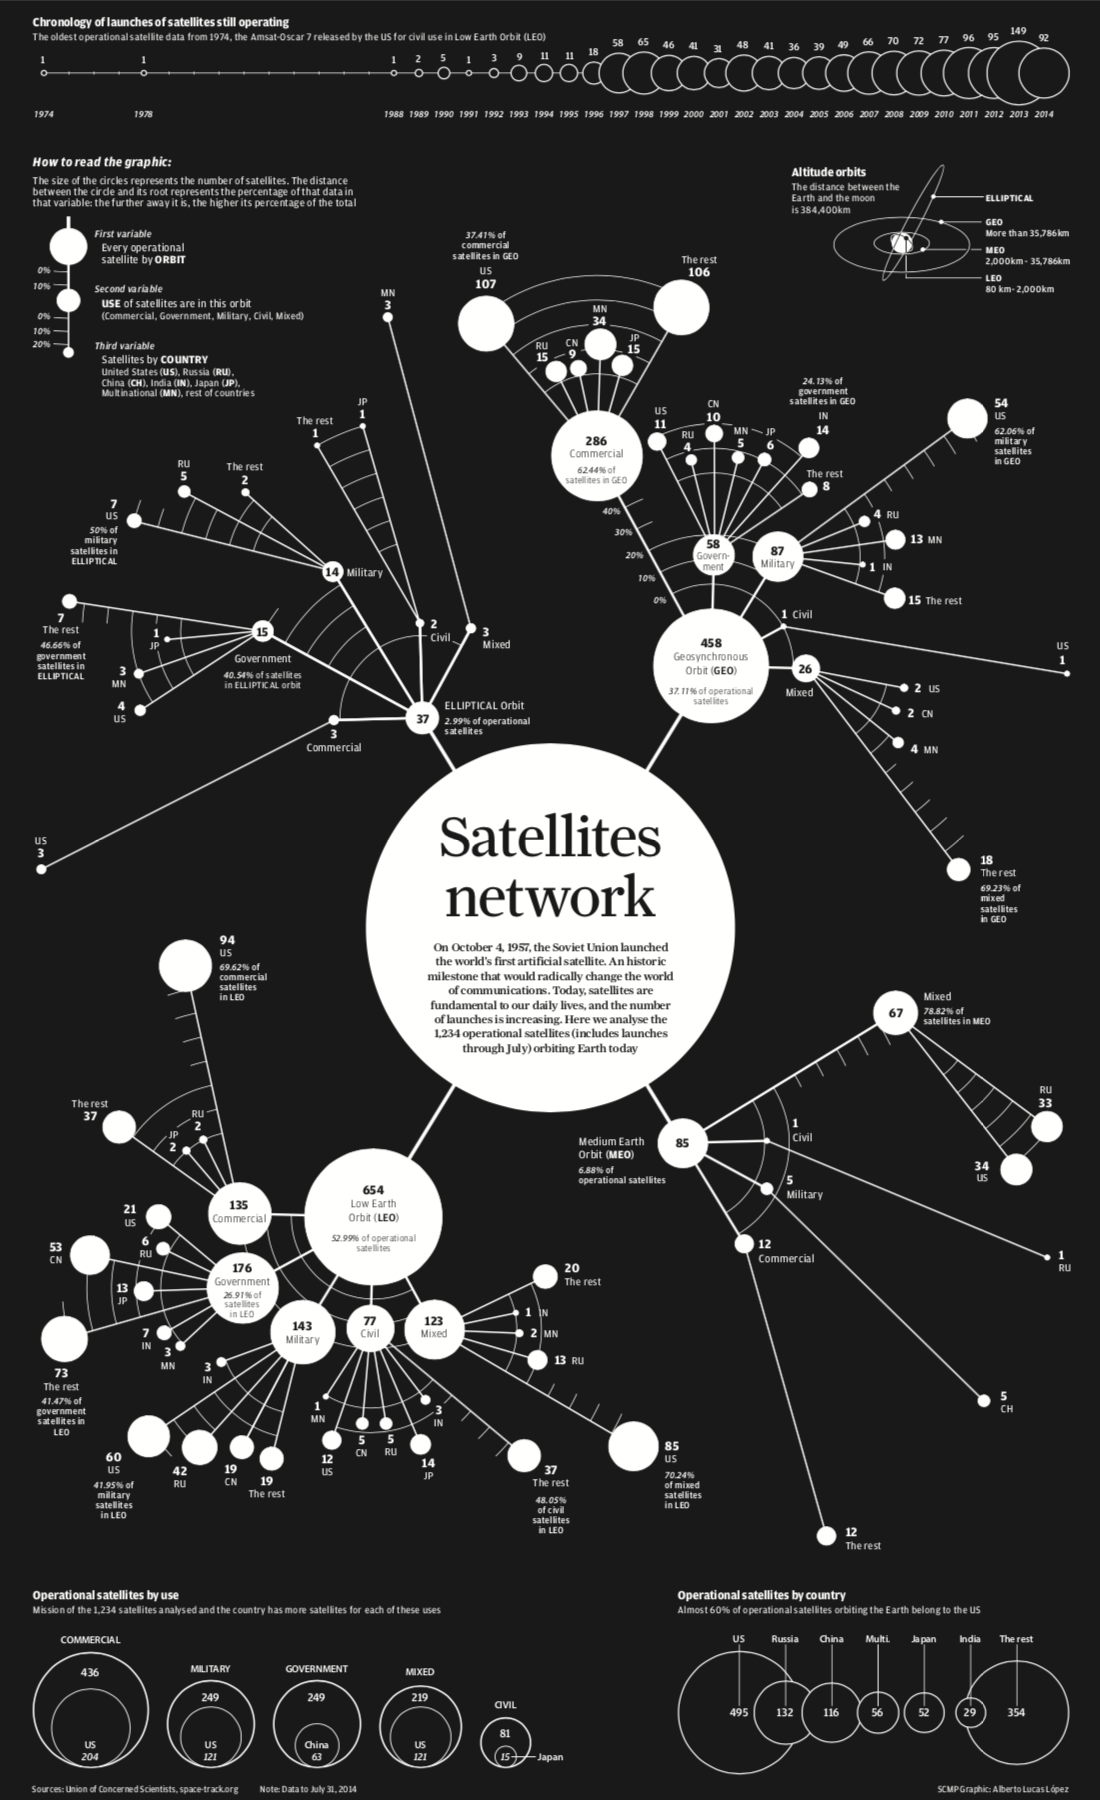 Satellites network